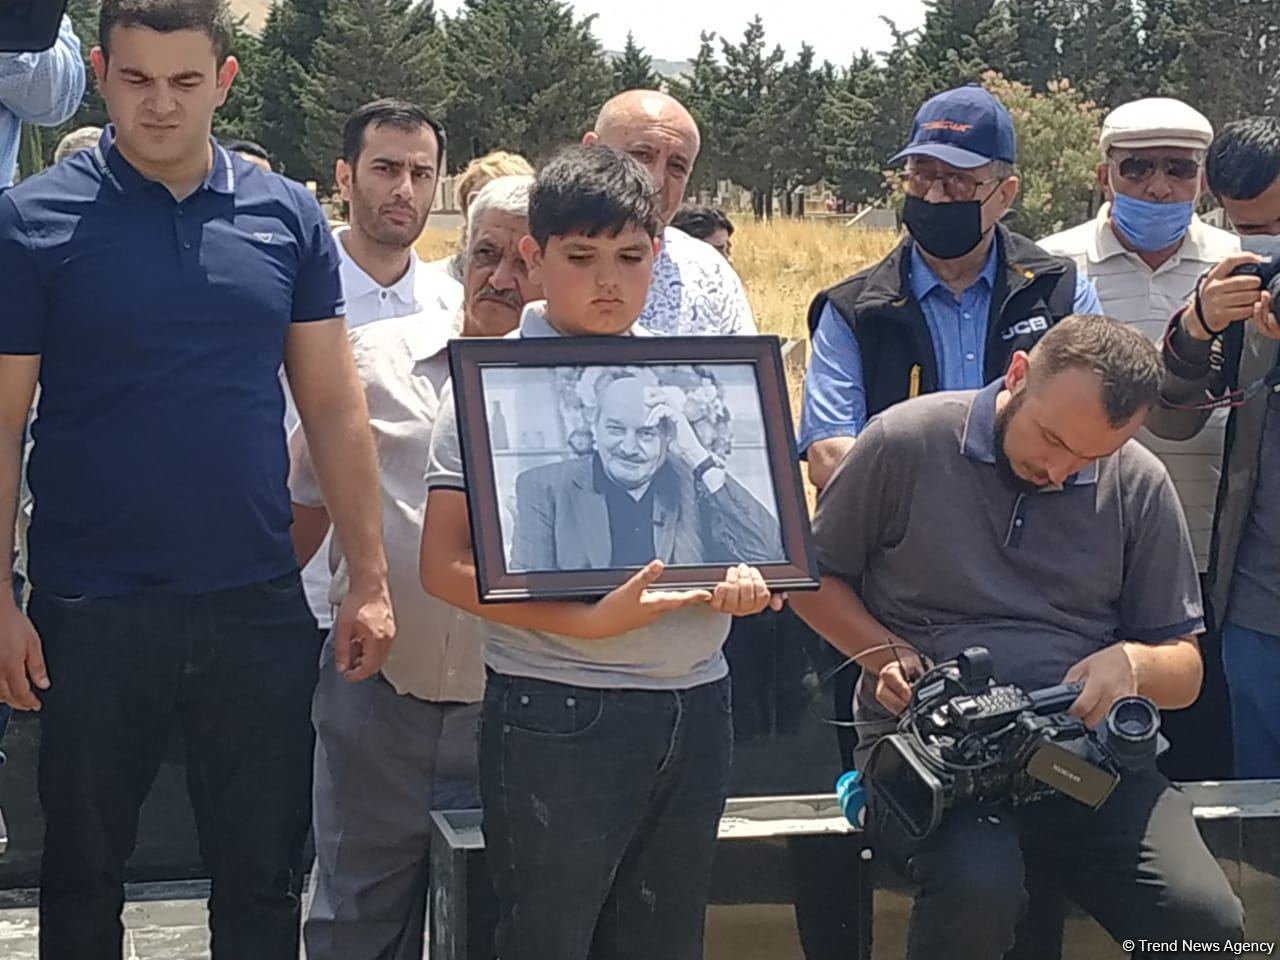 В Баку прошли похороны народного артиста Рамиза Азизбейли (ФОТО)